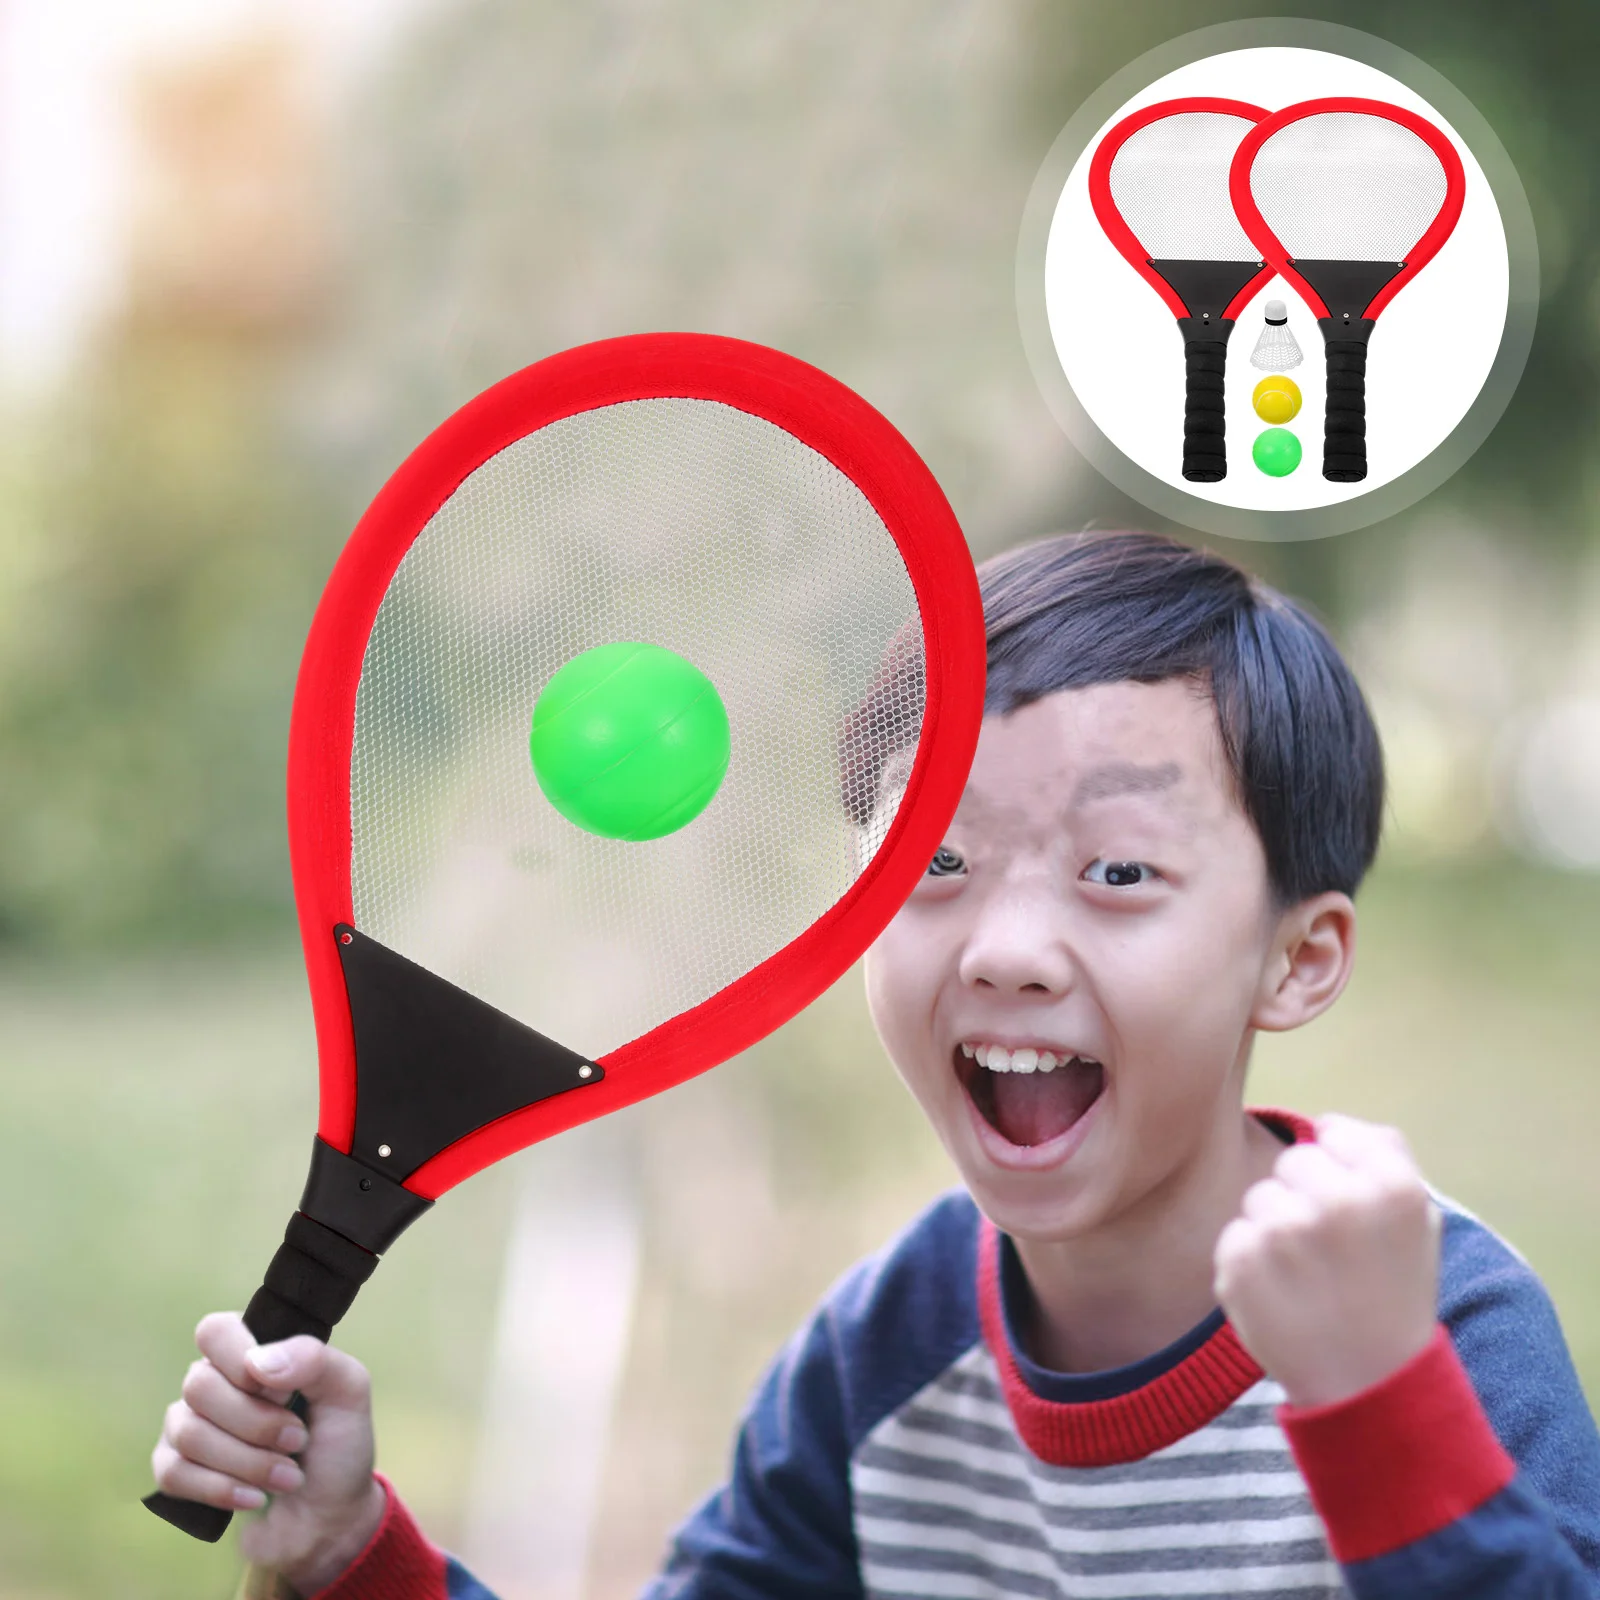 

1 Set of Outdoor Badminton Racket Interactive Badminton Tennis Toy Children Sports Ball Game Toy